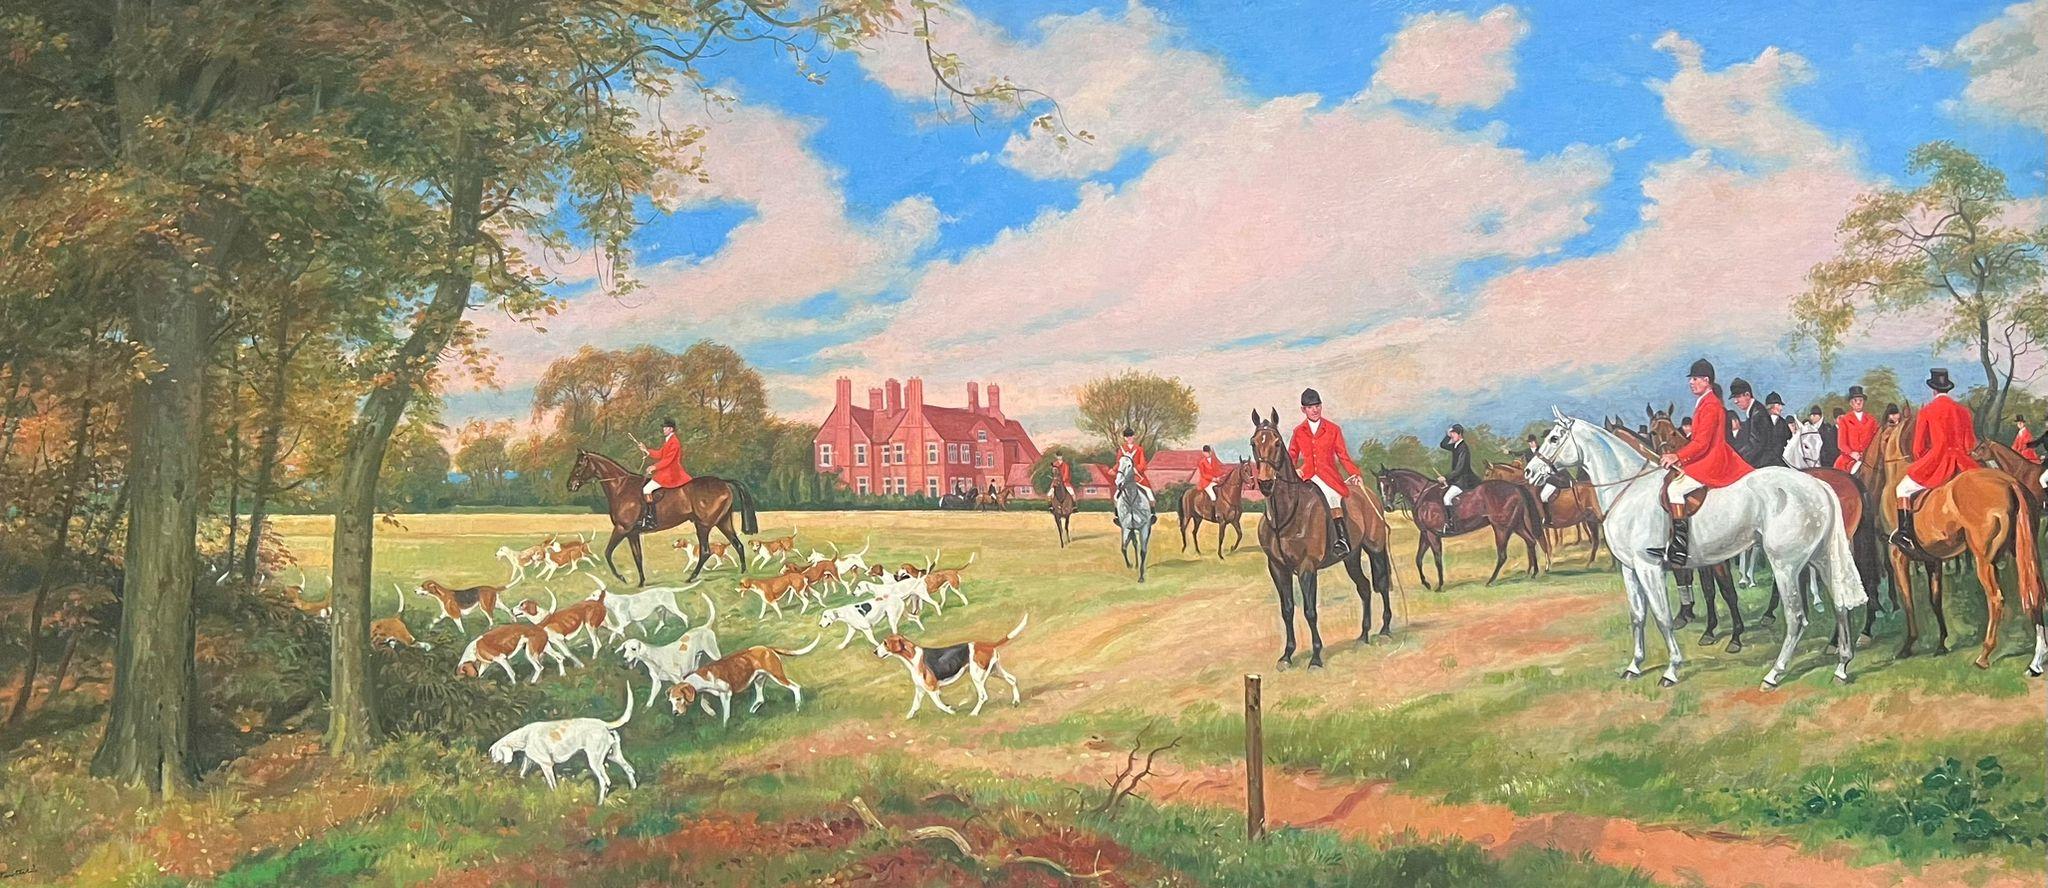 Huge British Sporting Art Oil Painting Hunting Scene Horse & Riders Before House